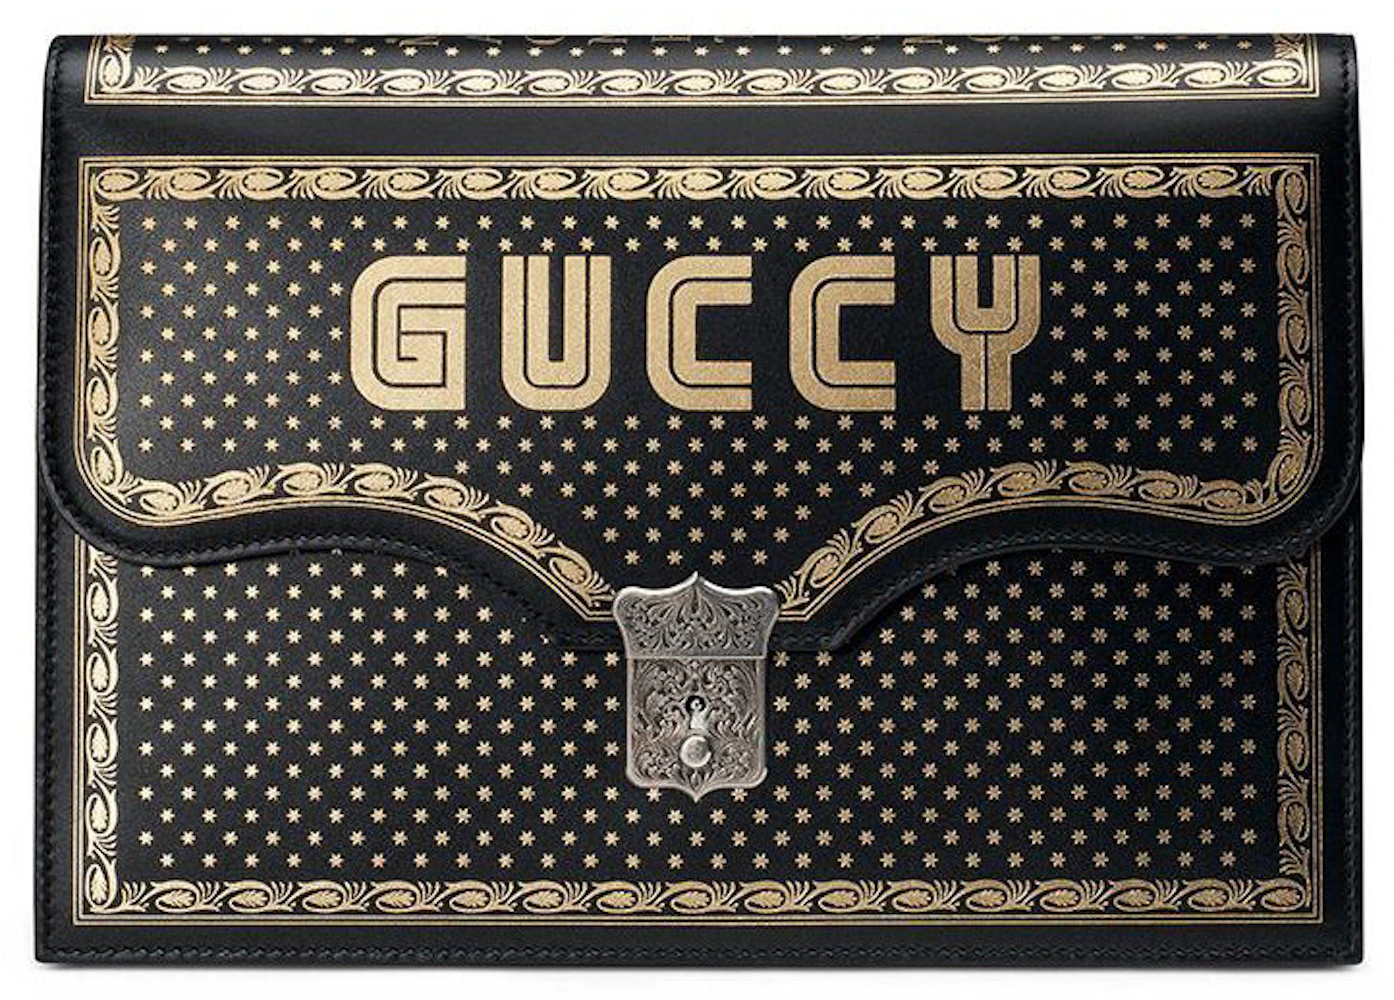 Gucci Guccy Star Print Leather - Gucci Clutch Bag